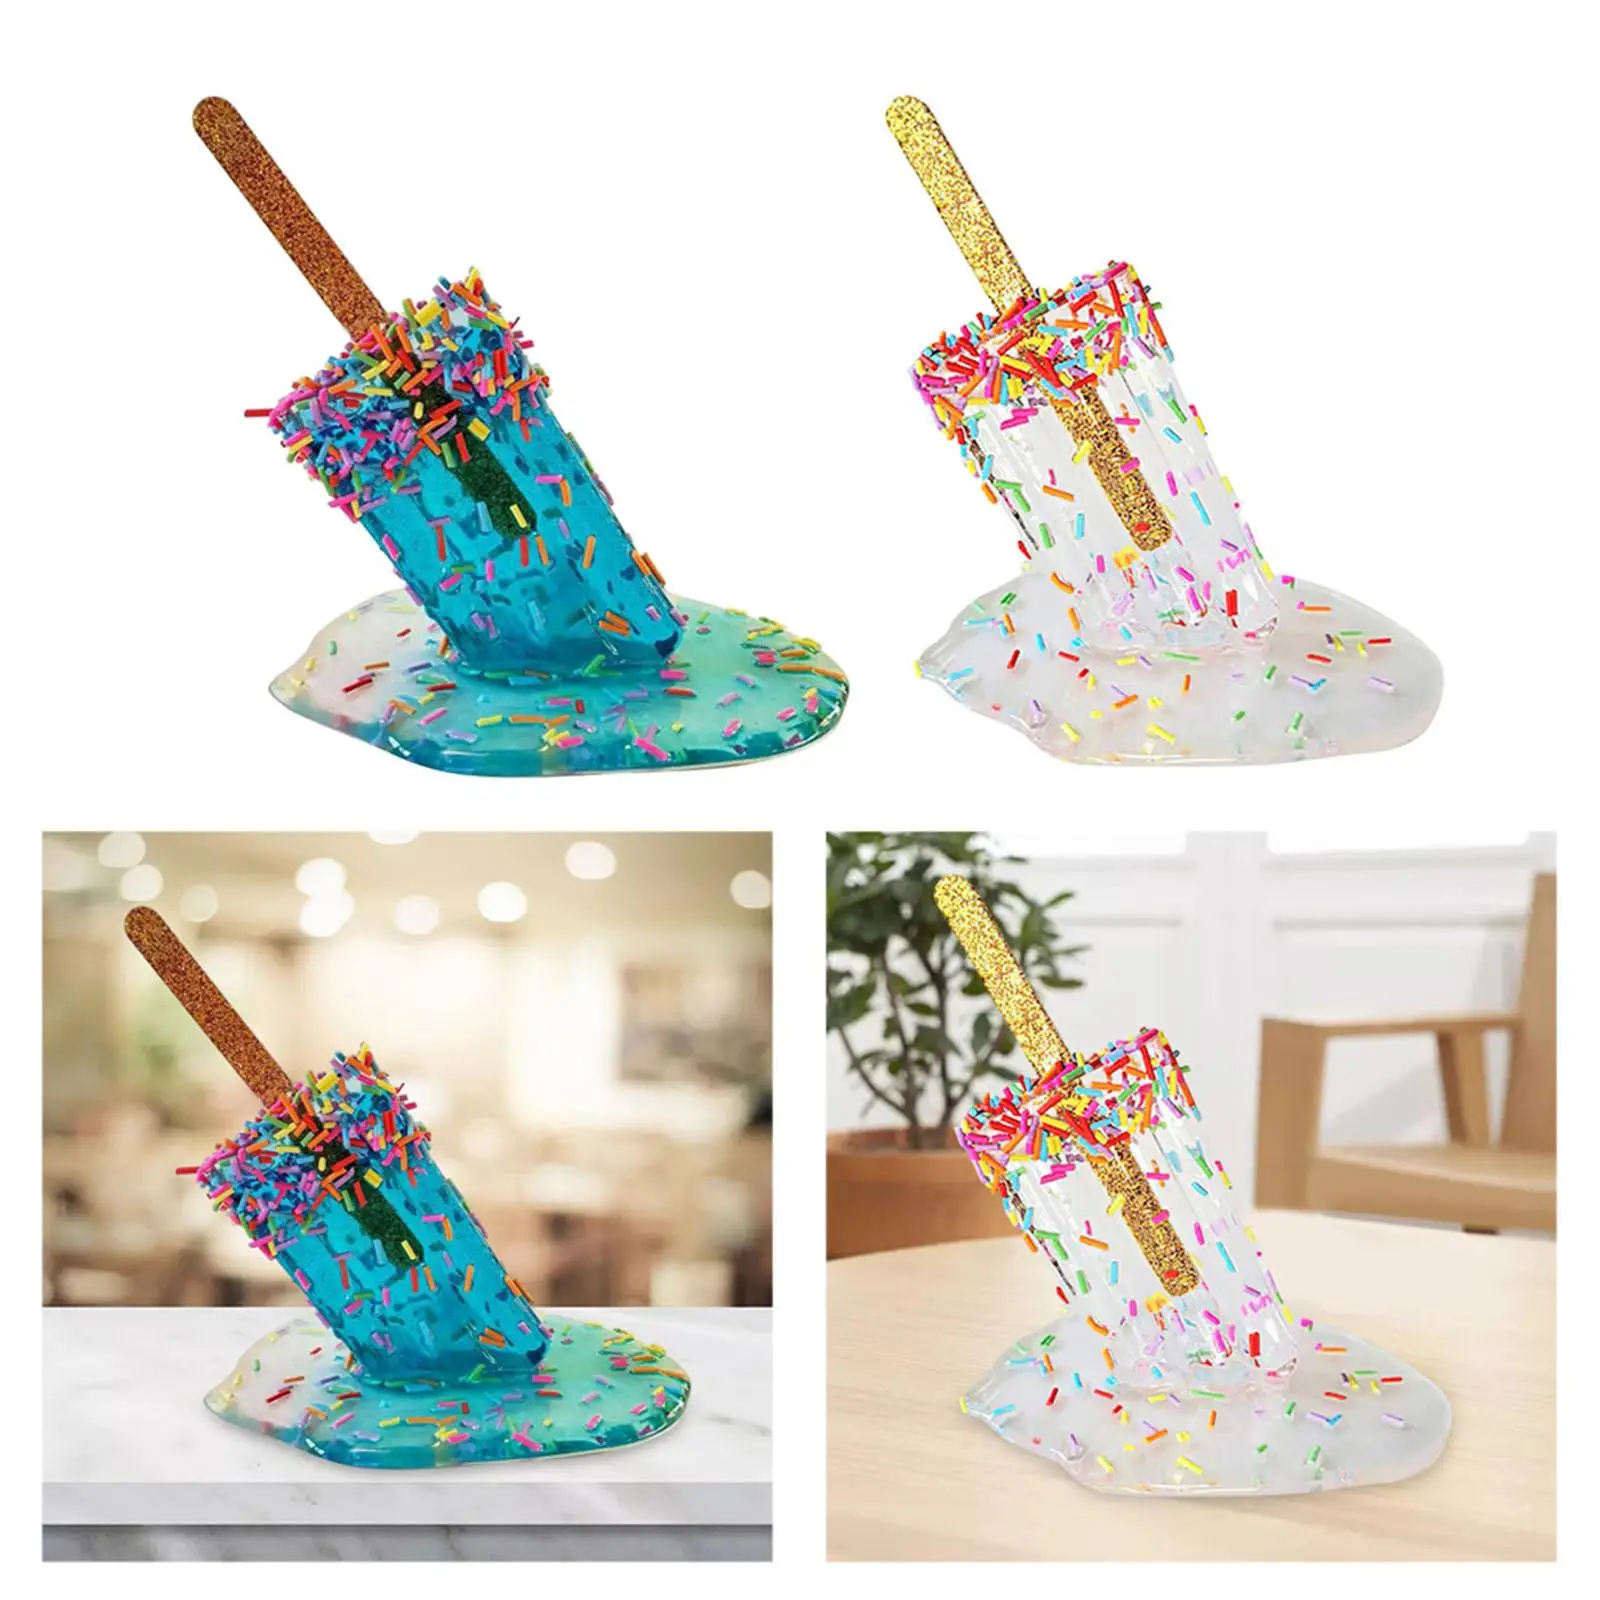 2 Pieces Creative Melting Popsicle Sculpture Melting Ice  Ornaments Funny Popsicle for Desktop Shop Home Decor Kids Gift